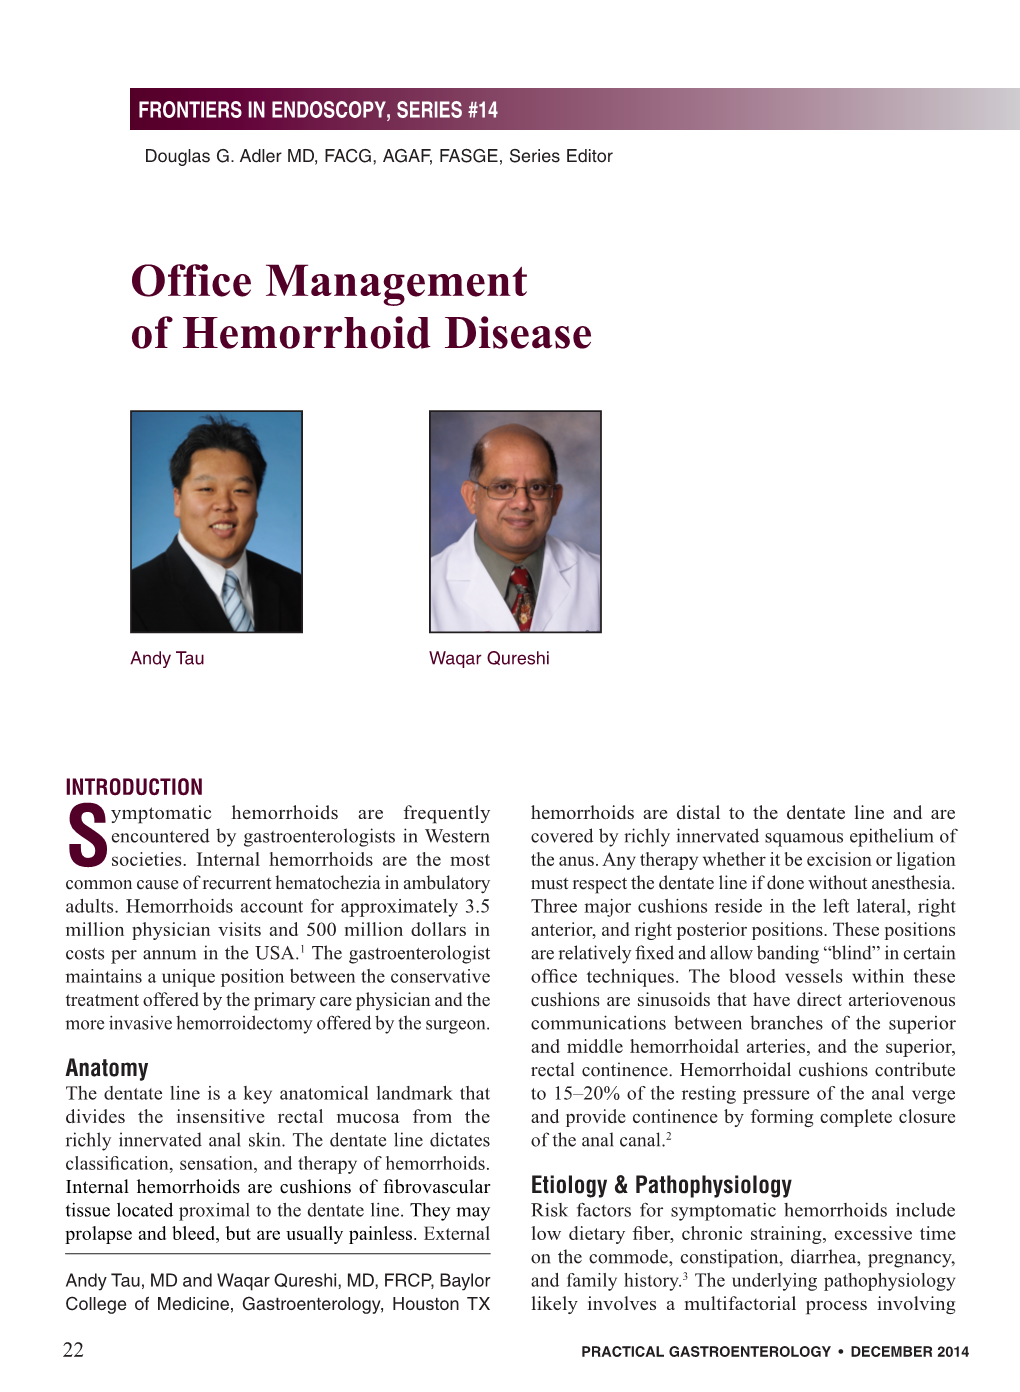 Office Management of Hemorrhoid Disease